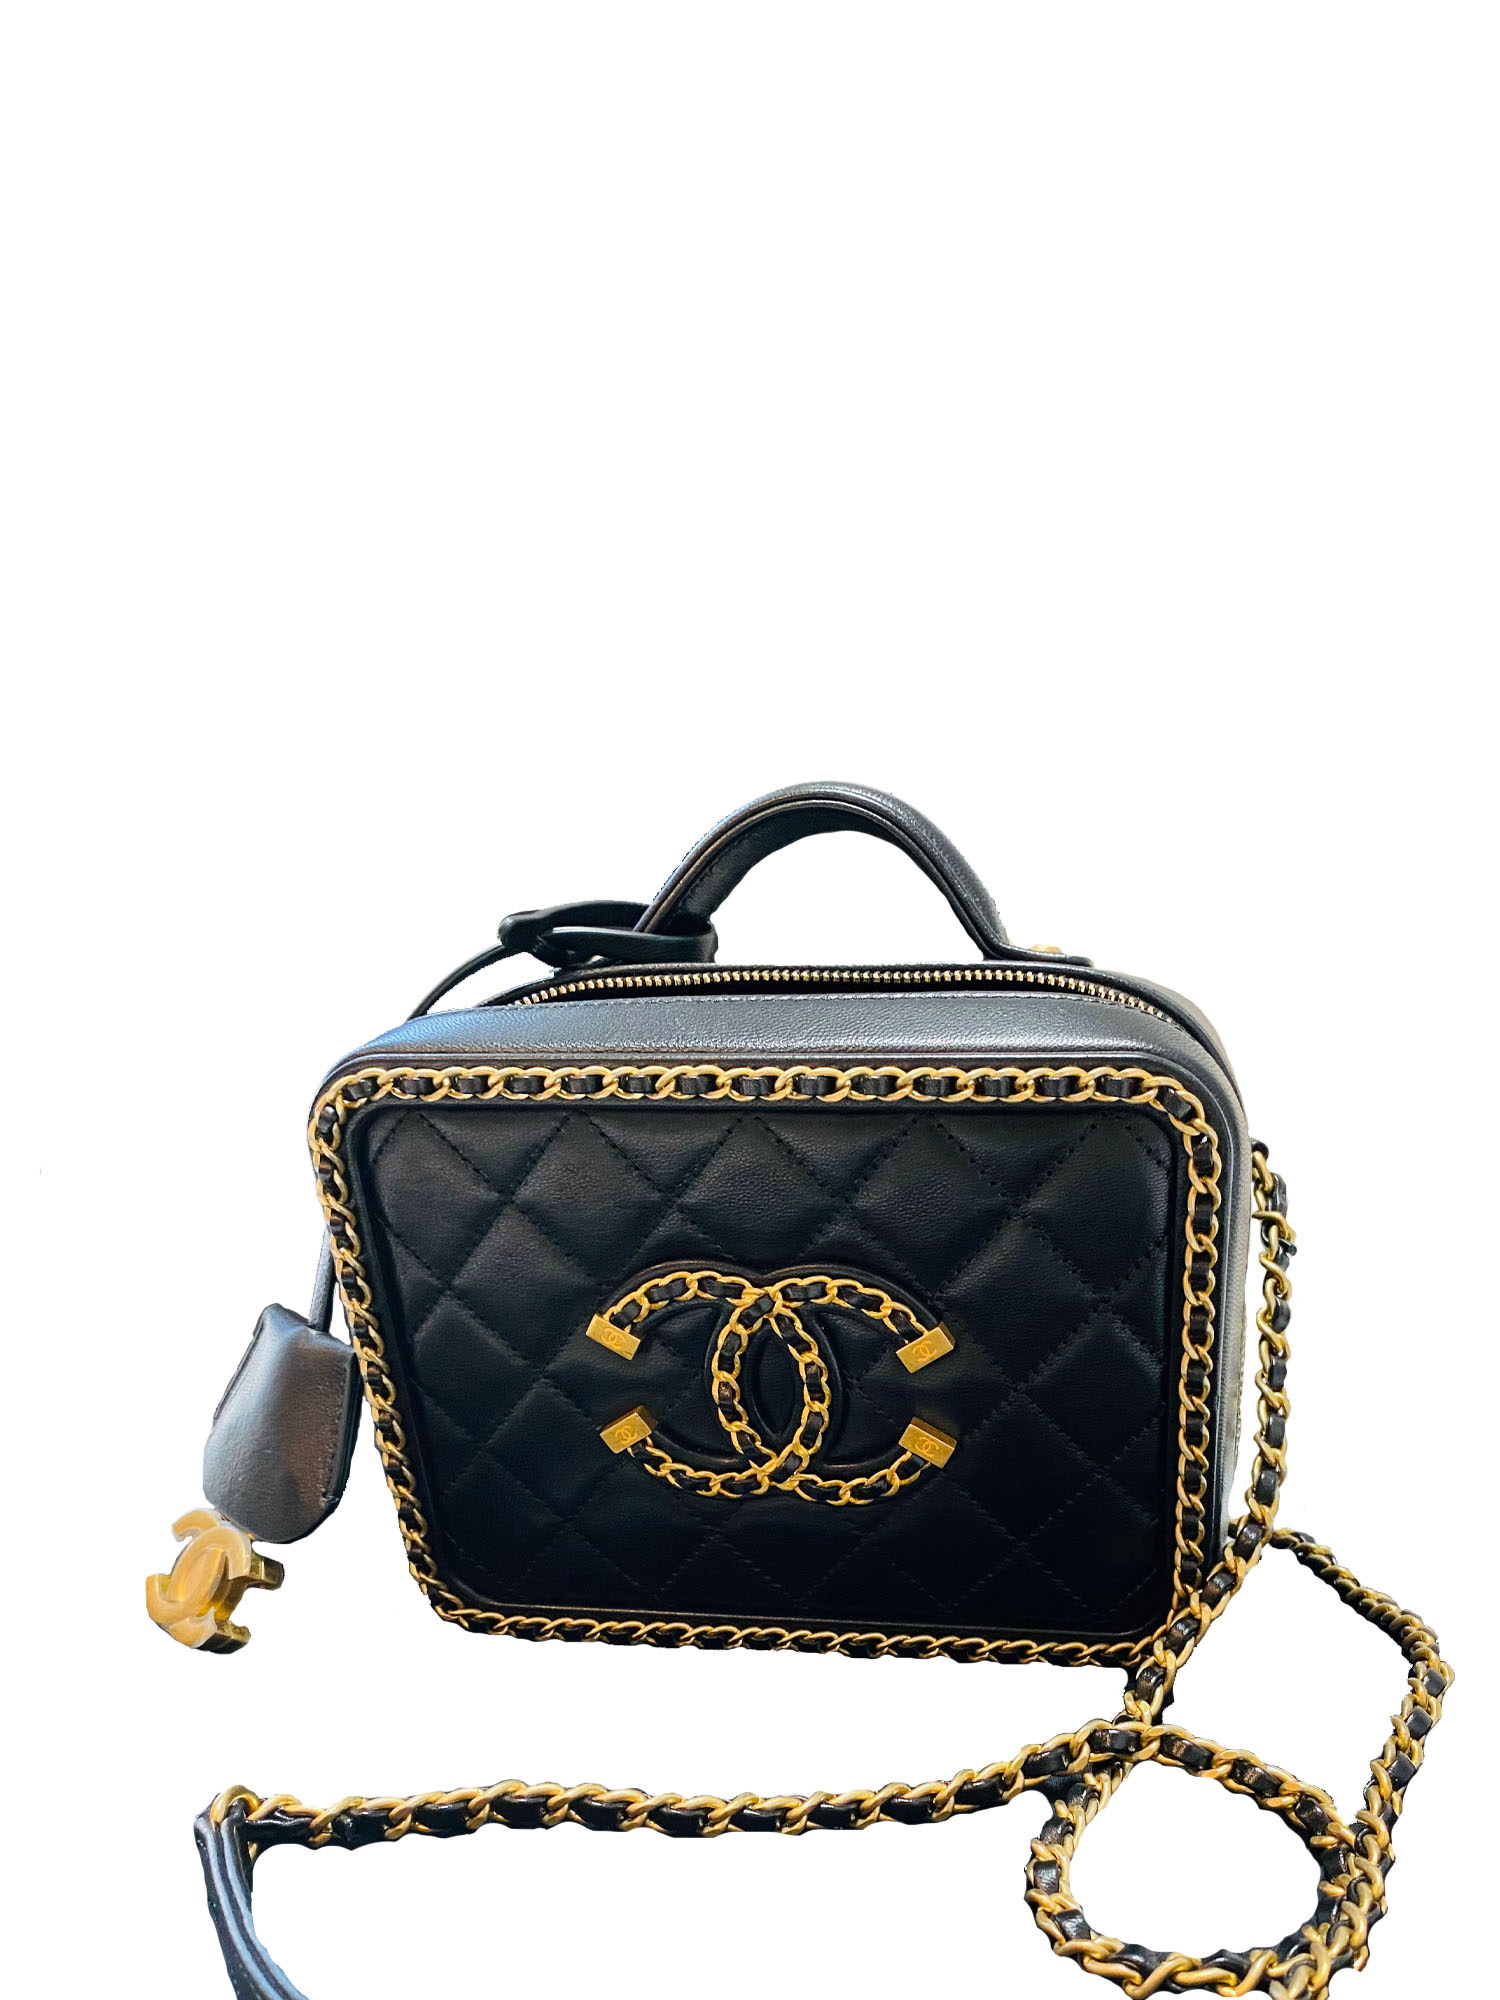 Chanel Vanity Case in Black Holo29